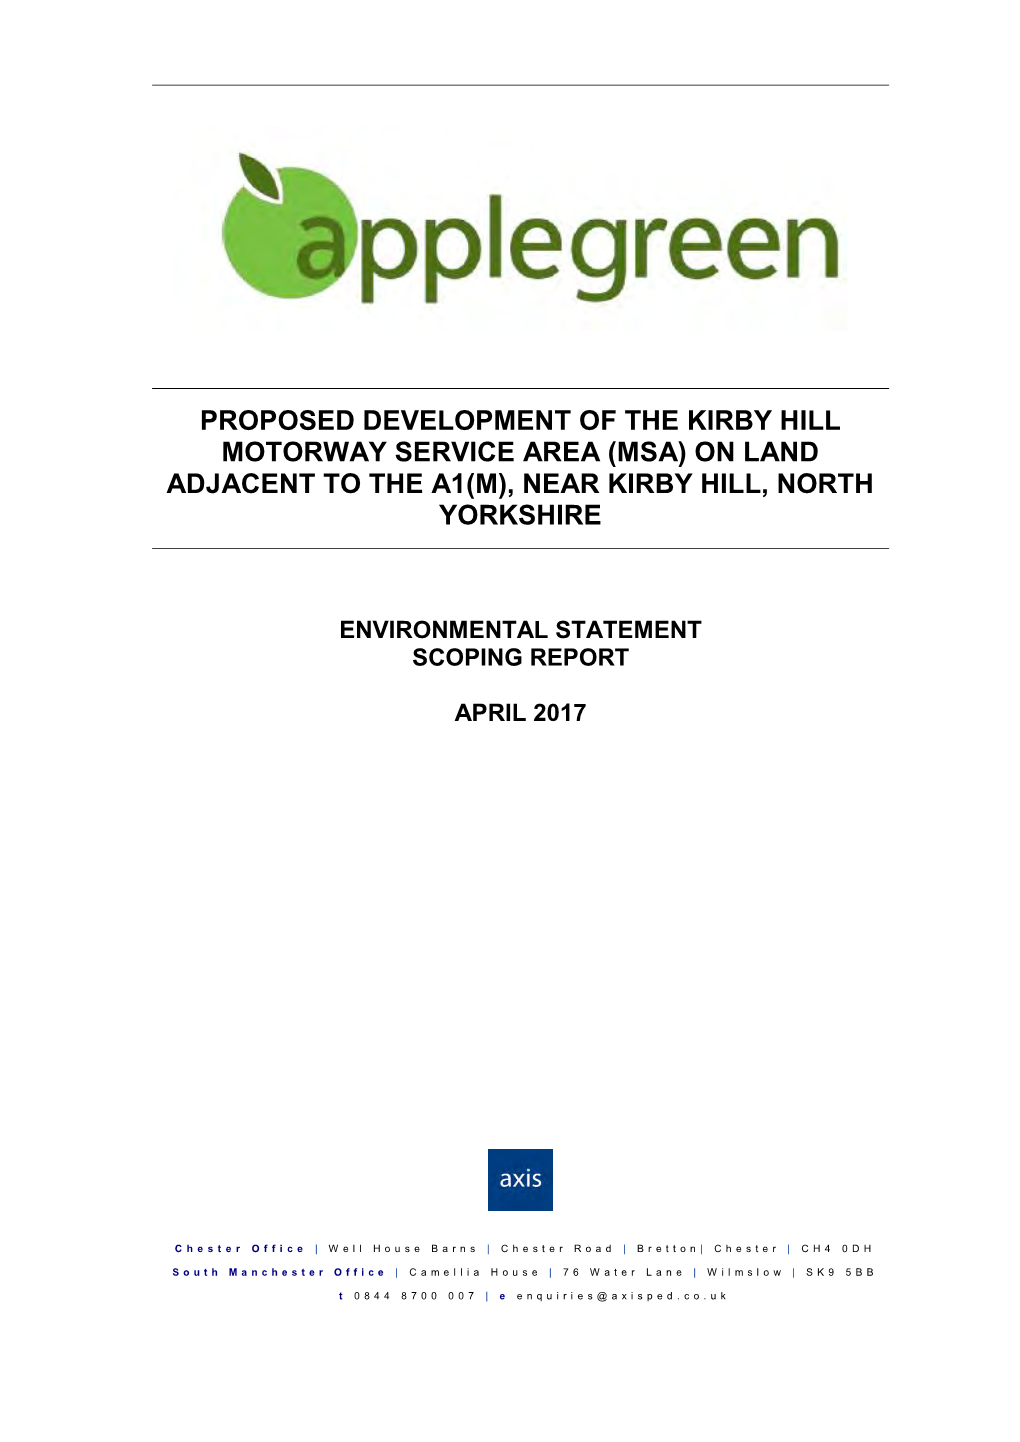 Environmental Statement Volume 3 Appendix 2.1 Scoping Report